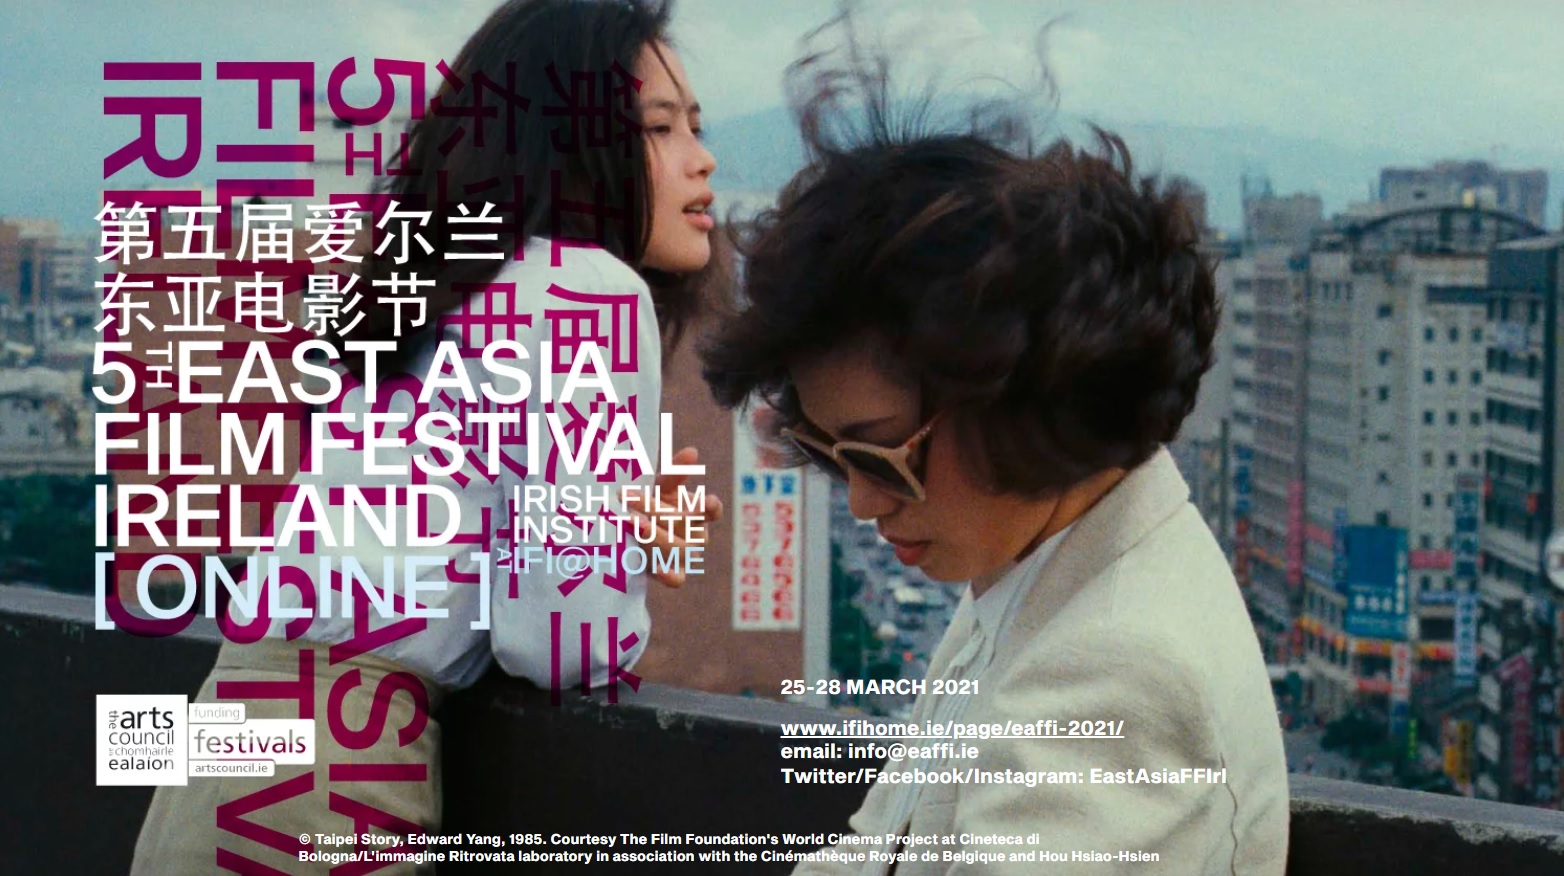 Three Taiwanese dramas featured at East Asia Film Festival Ireland